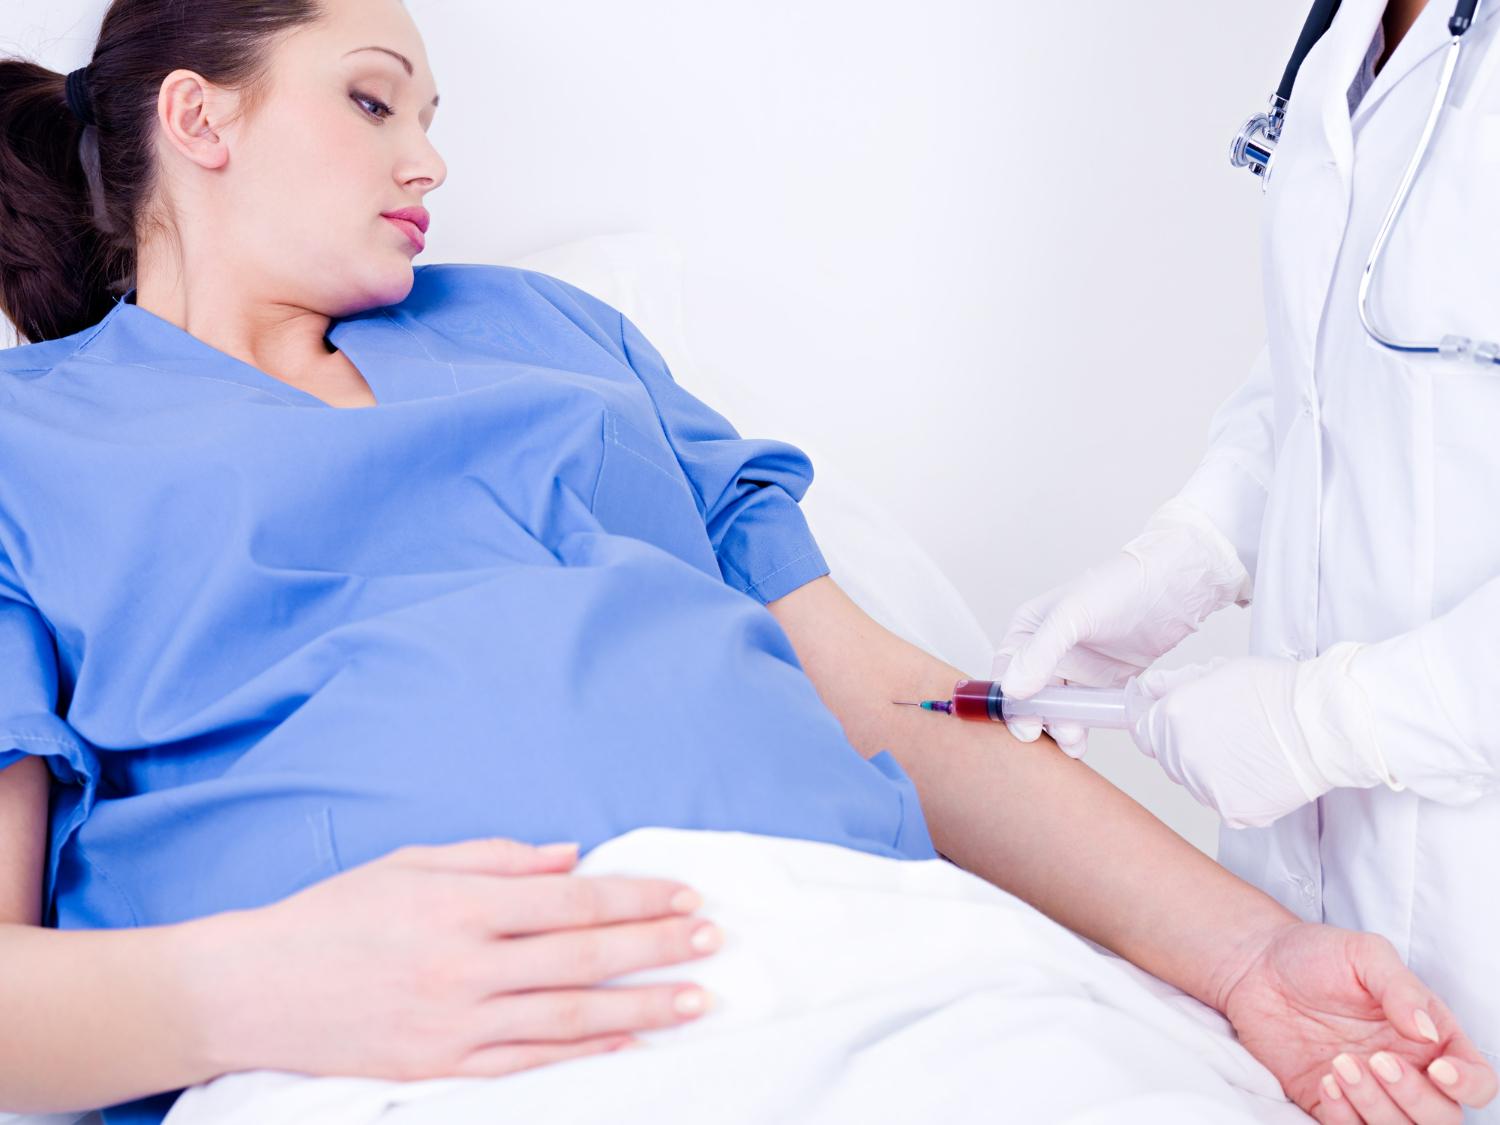 Dual Marker Test in Pregnancy